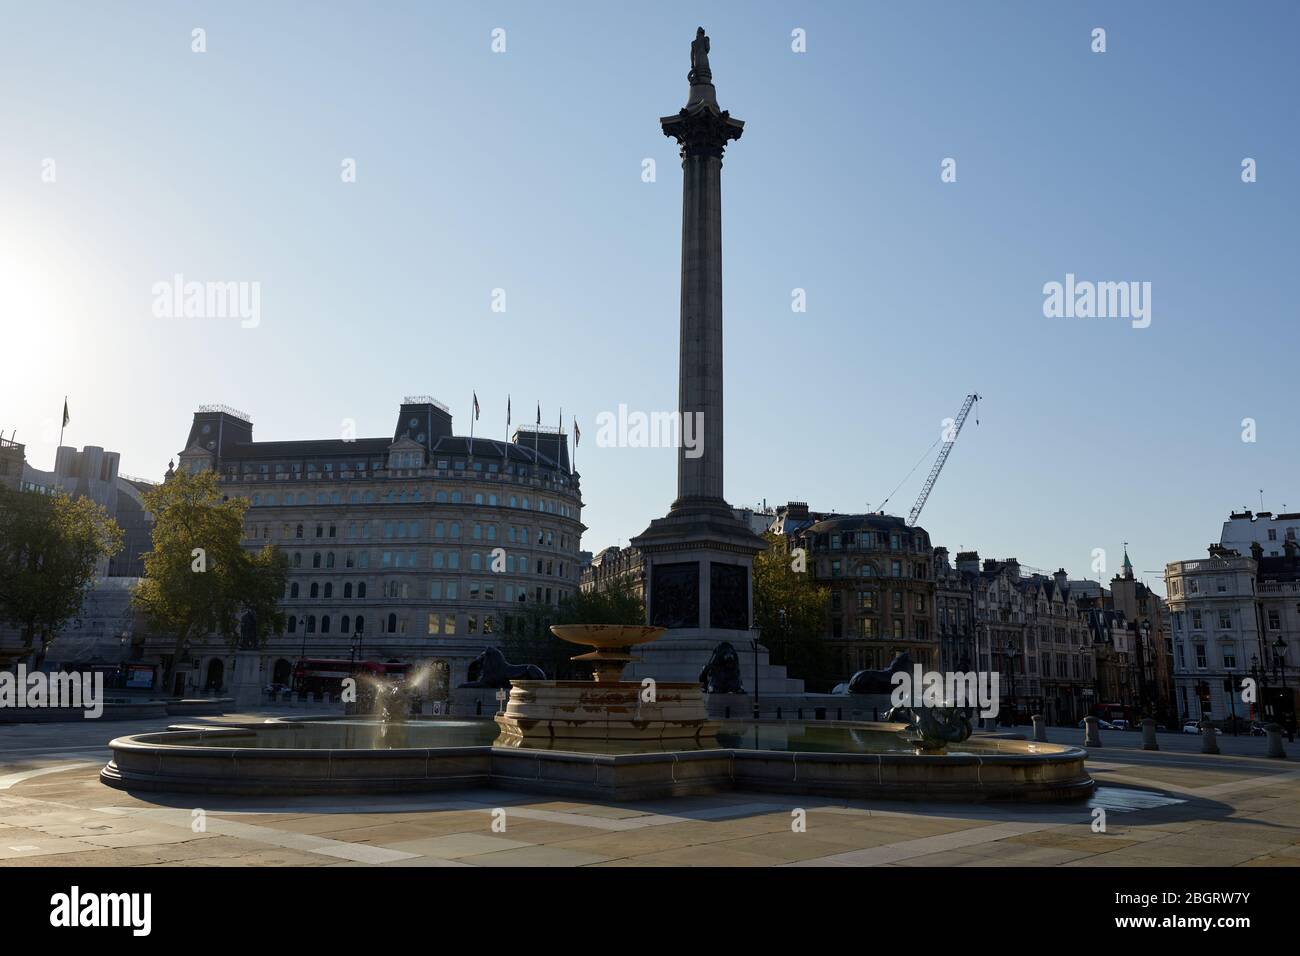 London, U.K. - 22 Apr 2020: Trafalgar Square in the heart of London, deserted during the coronavirus lockdown. Stock Photo